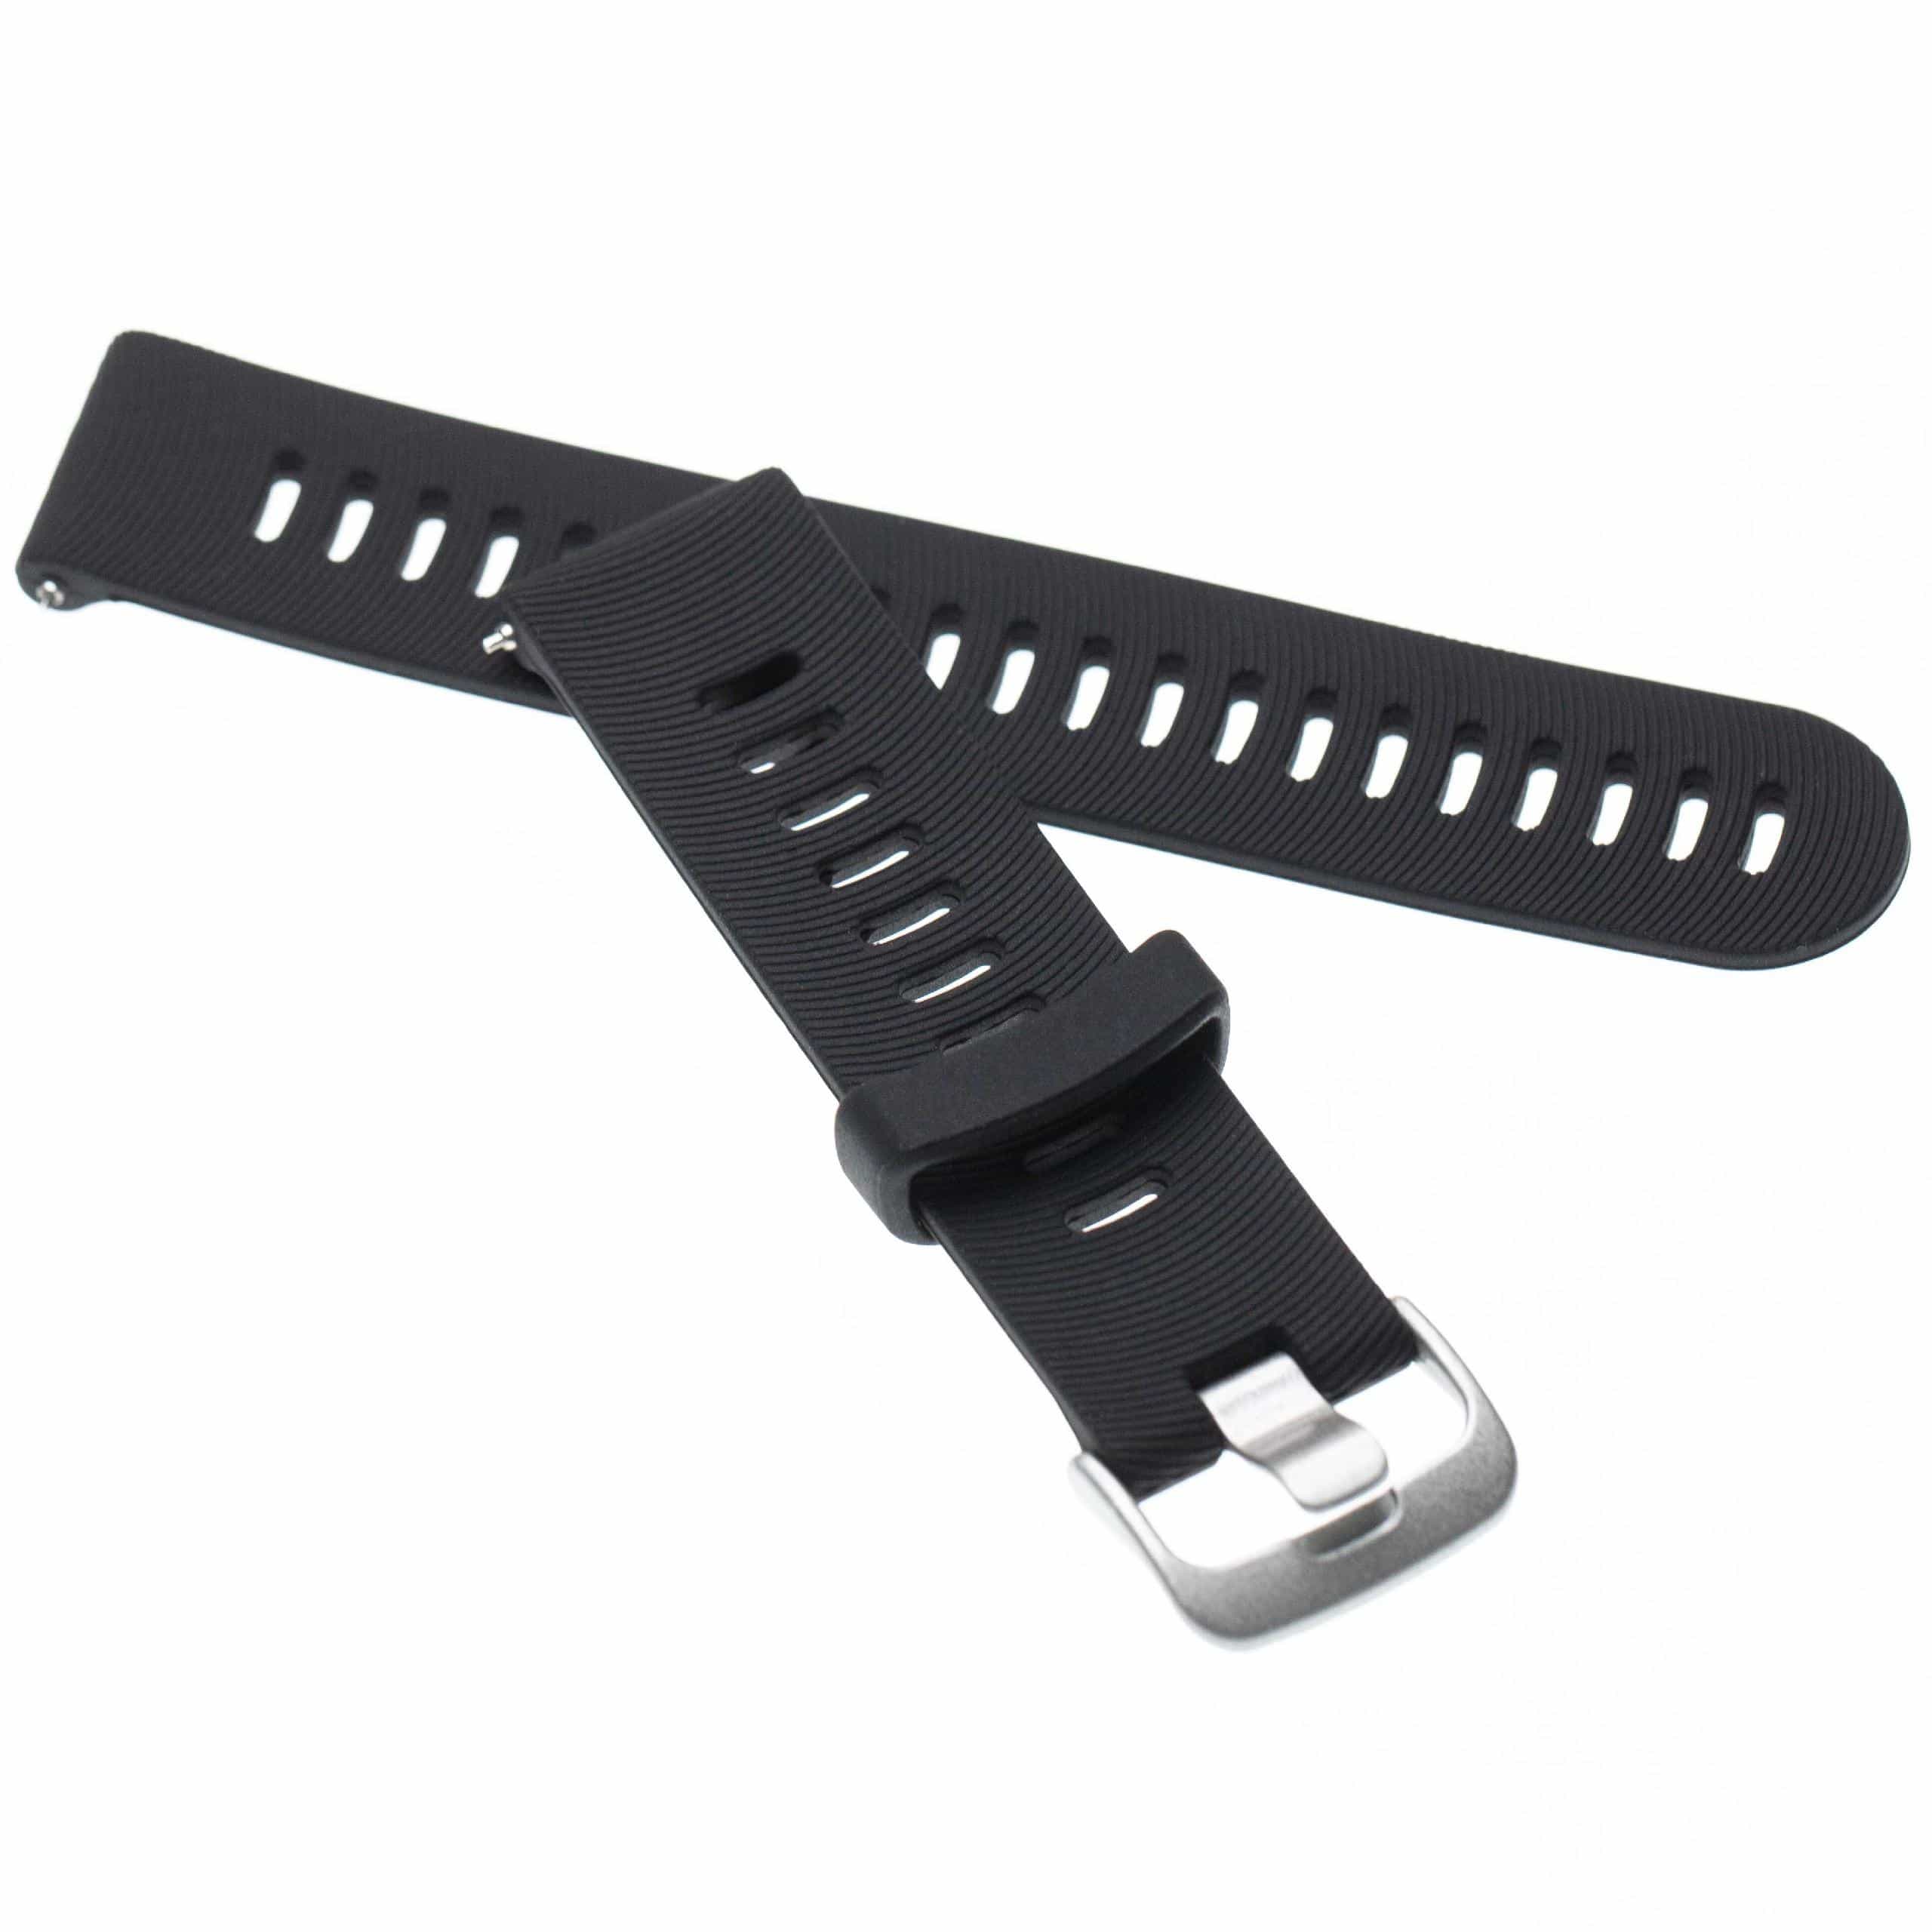 wristband for Garmin Forerunner Smartwatch - 11 + 8.5 cm long, silicone, black